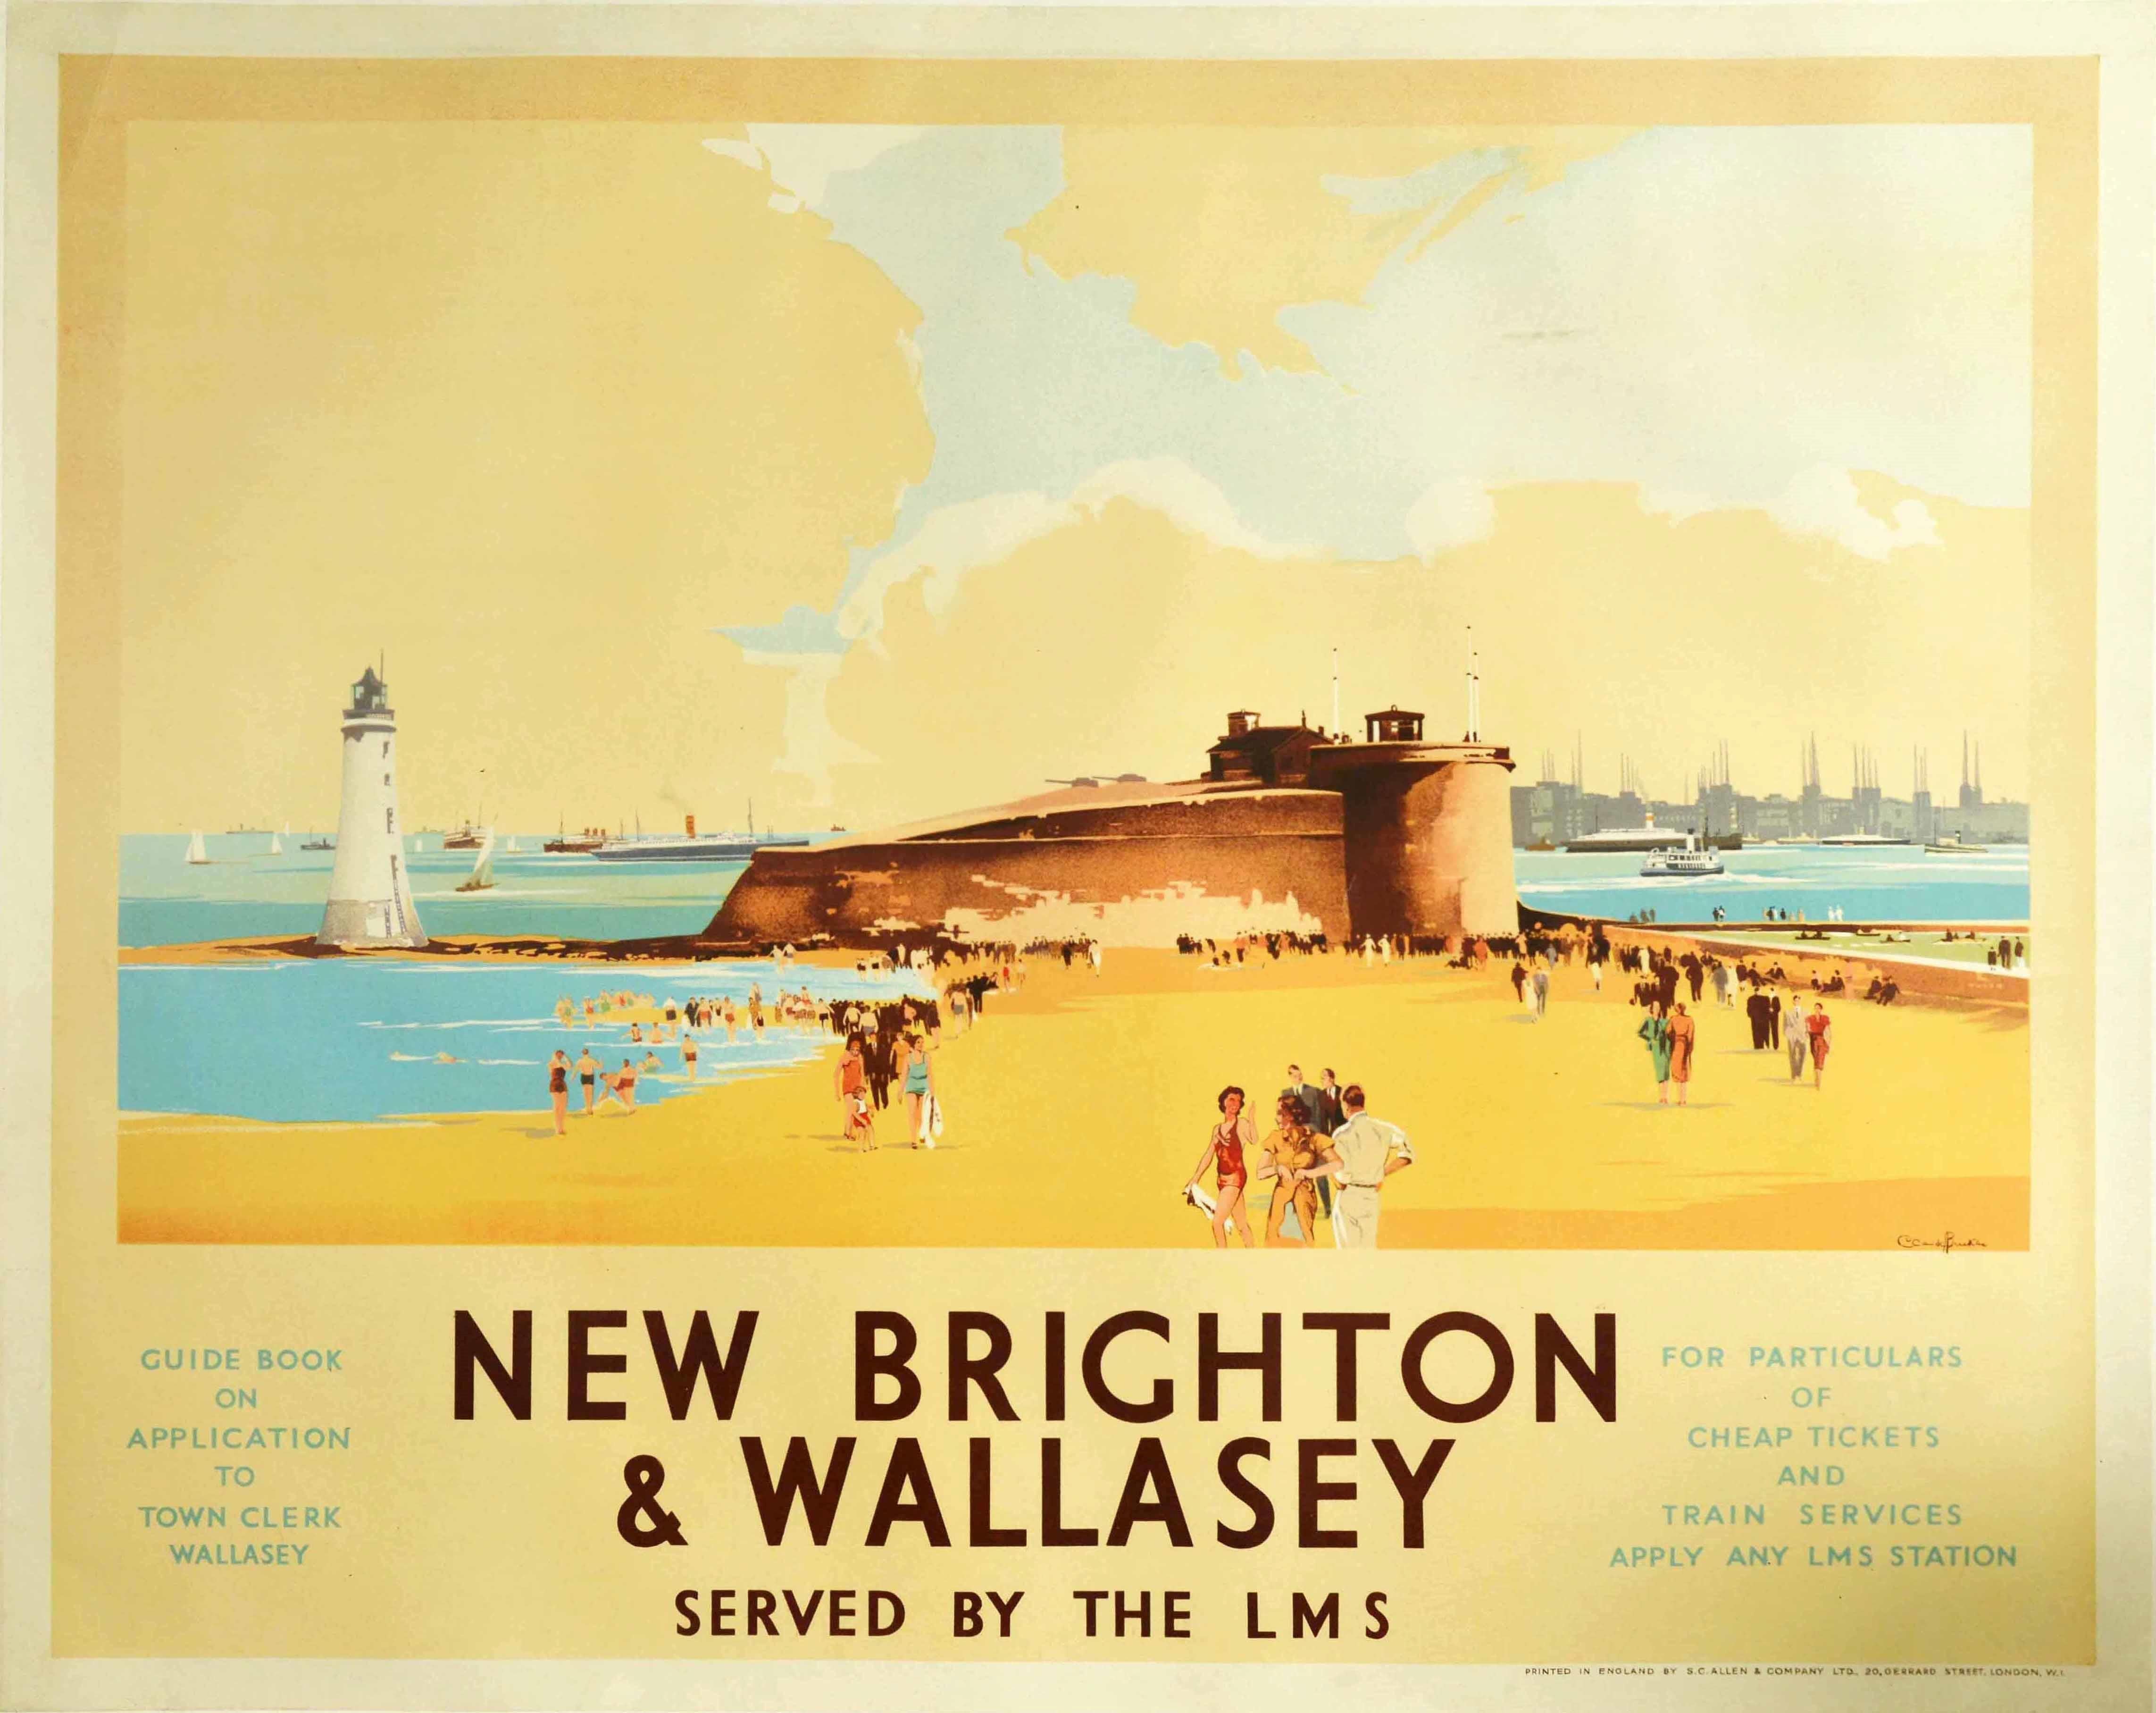 Claude Buckle Print - Original Vintage Poster New Brighton & Wallasey Fort Perch LMS Railway Liverpool